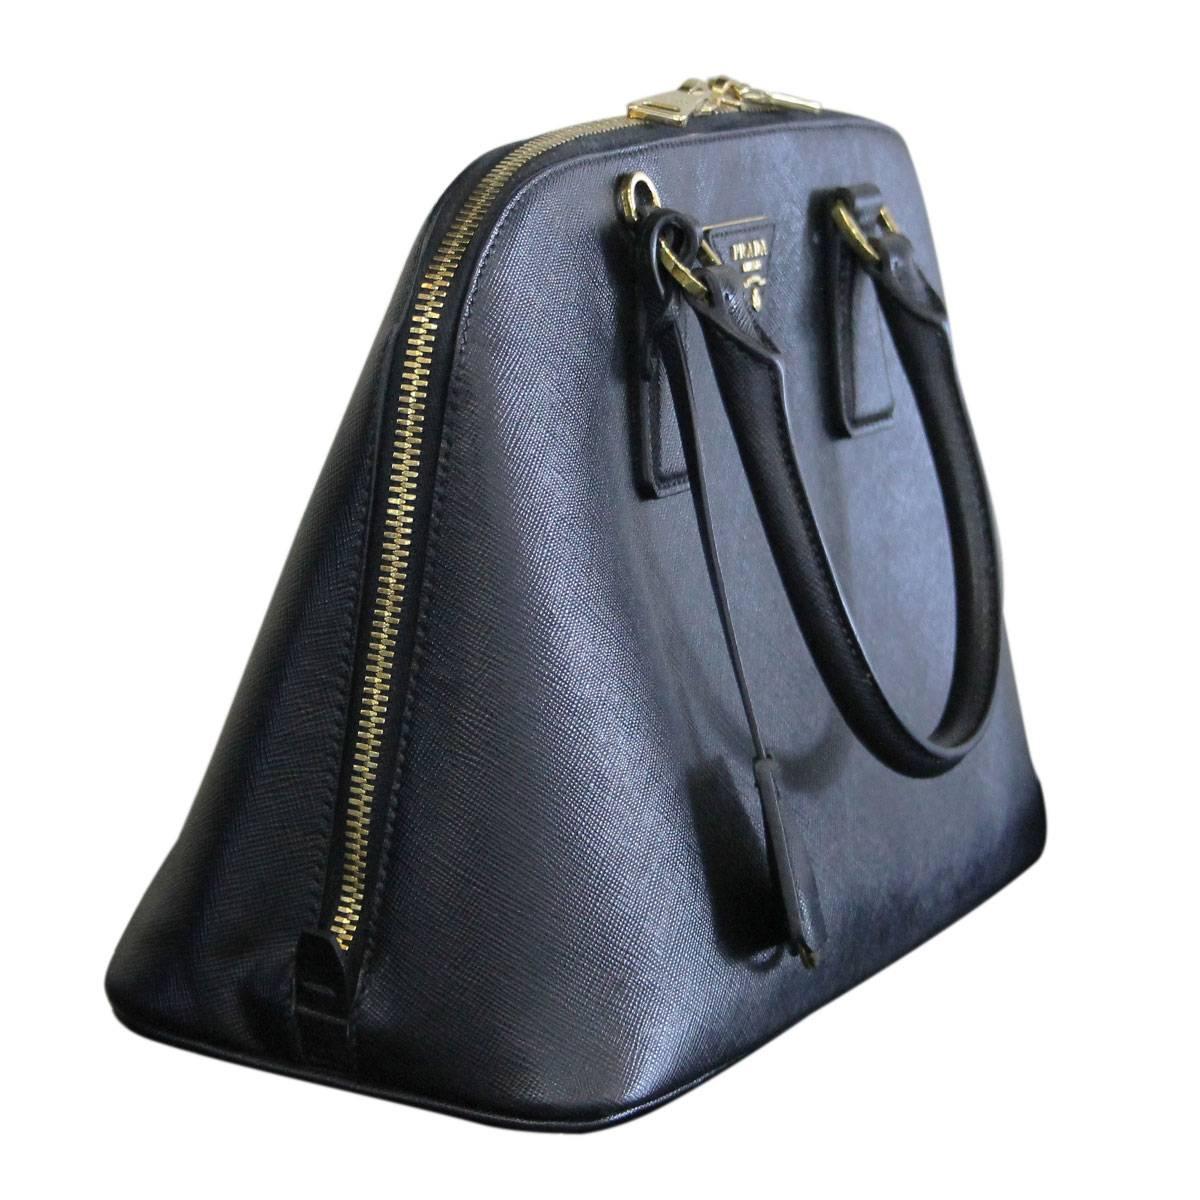 Prada Saffiano Black Leather Double Zip-Top Tote Shoulder Bag at 1stdibs